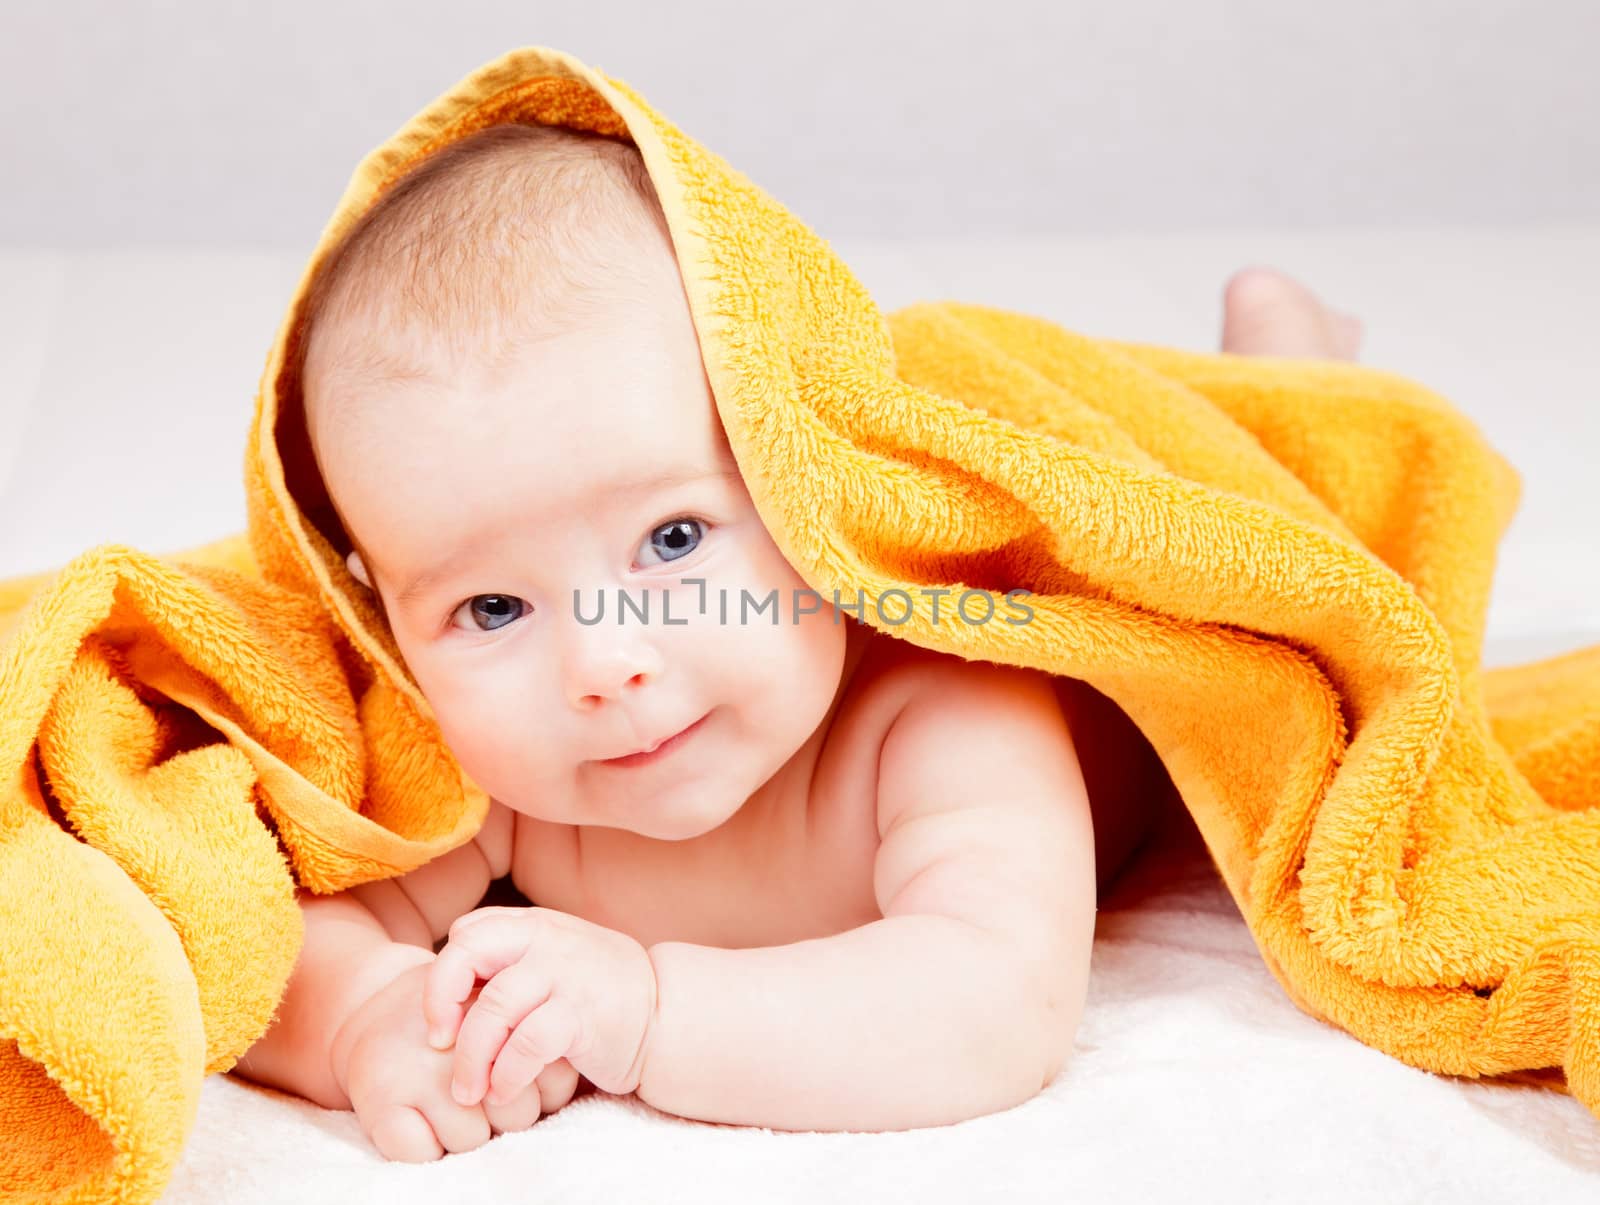 Infant under towel by naumoid